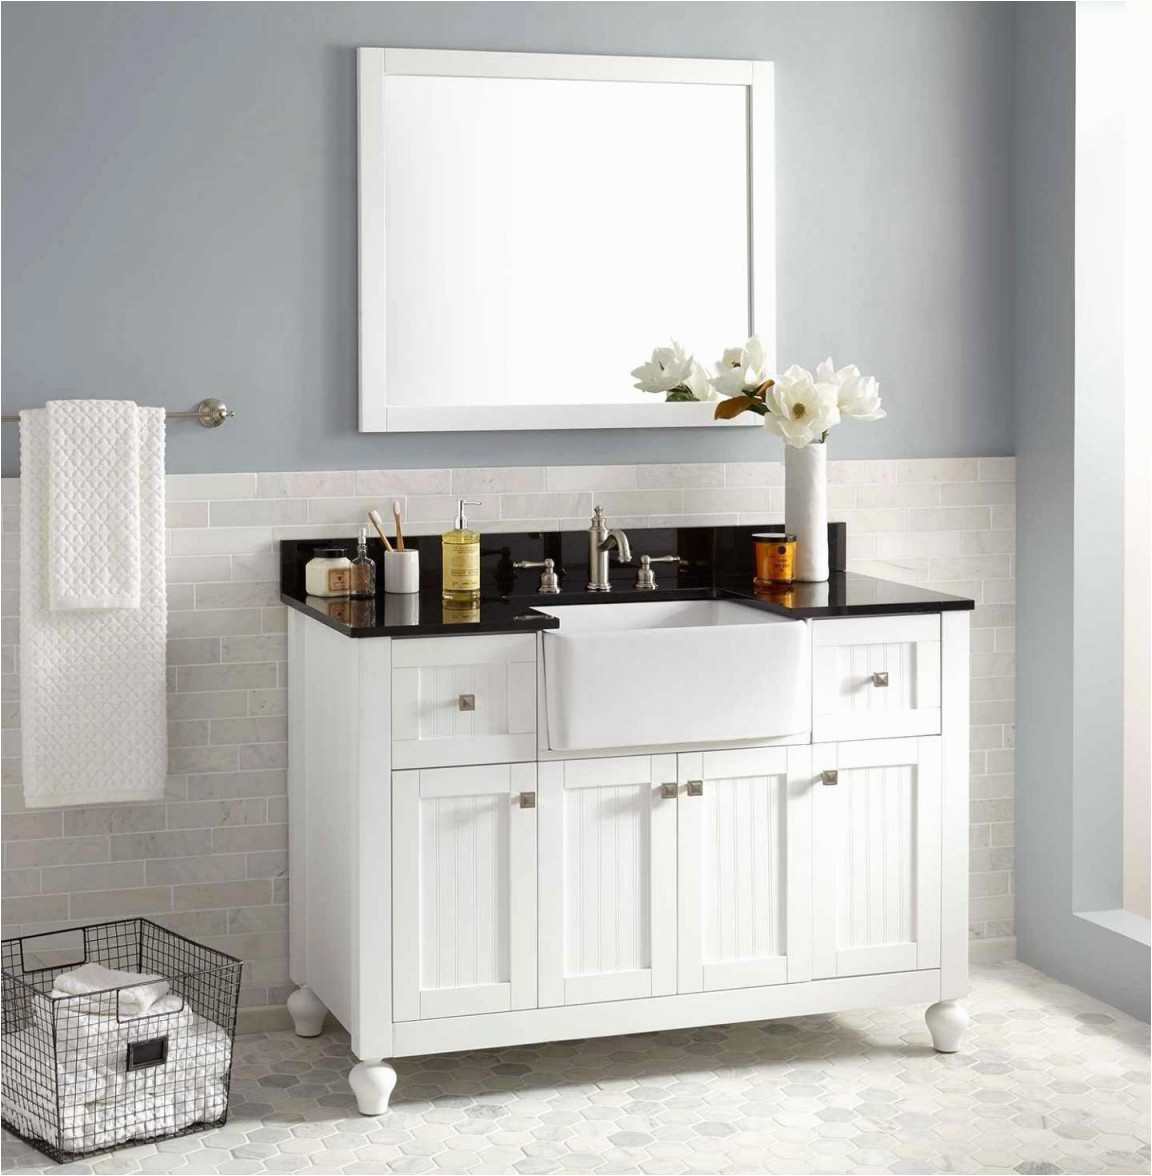 bathroom cabinets and sinks luxury fresh lighted bathroom cabinet home lighting ideas of bathroom cabinets and sinks